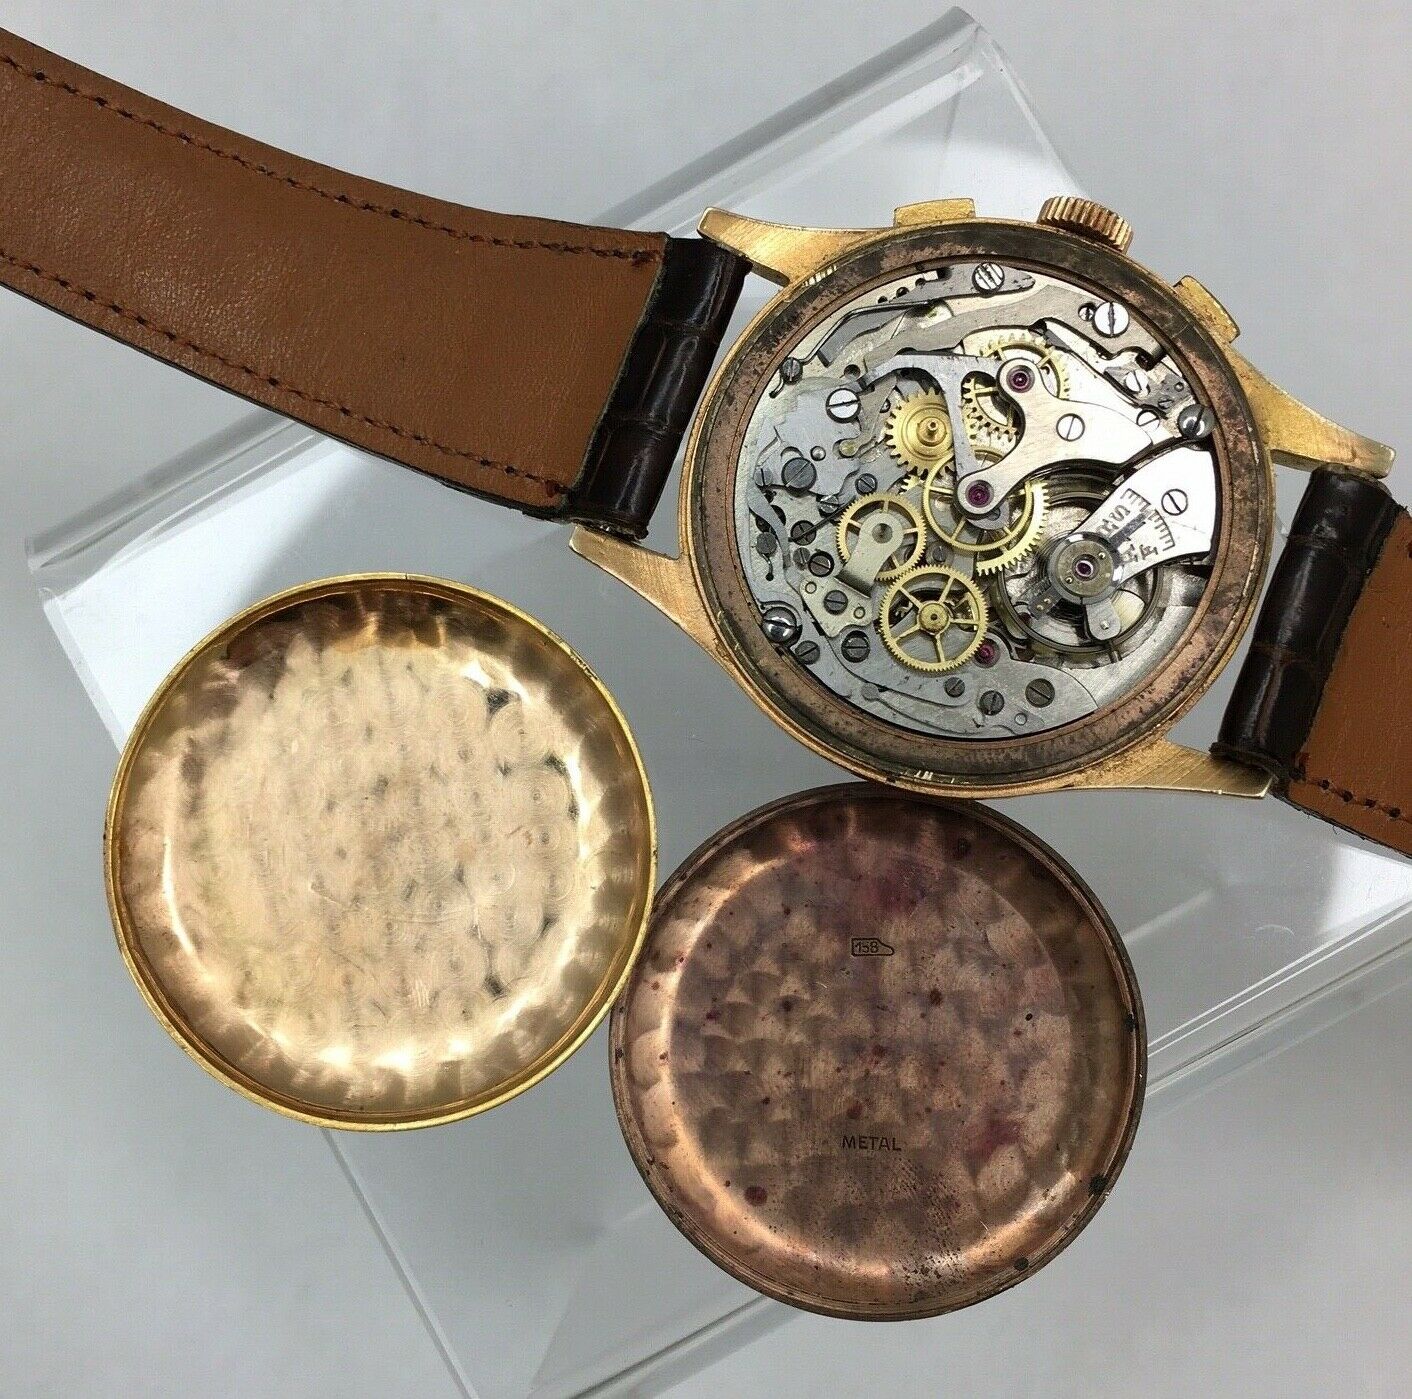 Chronographe Suisse Antimagnetic 18K Solid Rose Gold Watch Vintage